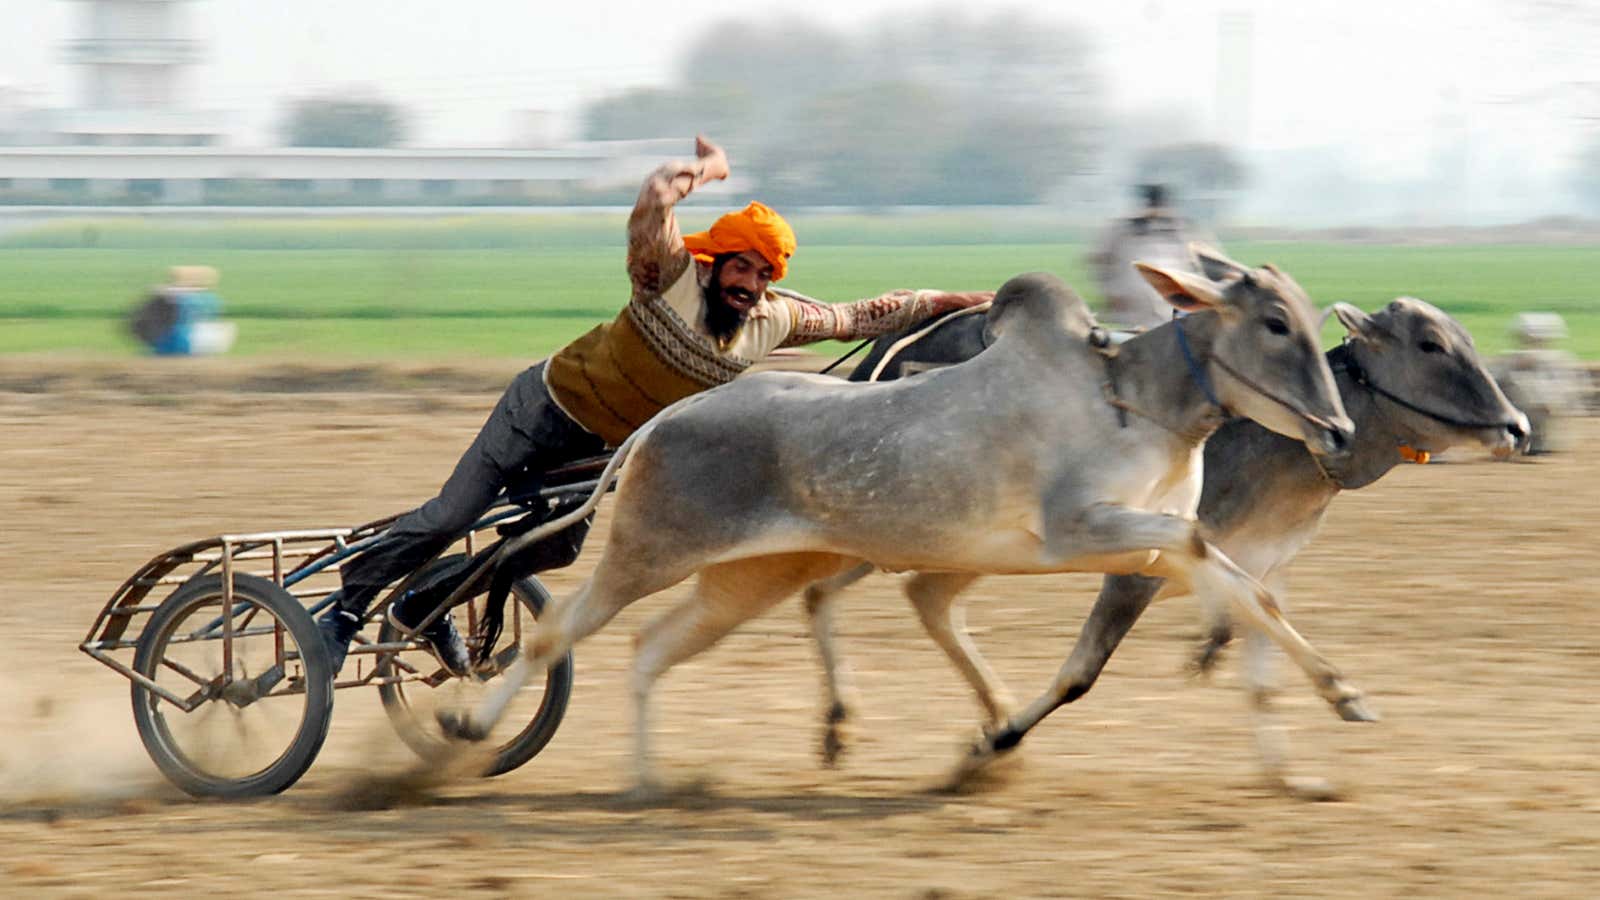 Punjab lacks that fast pace now.